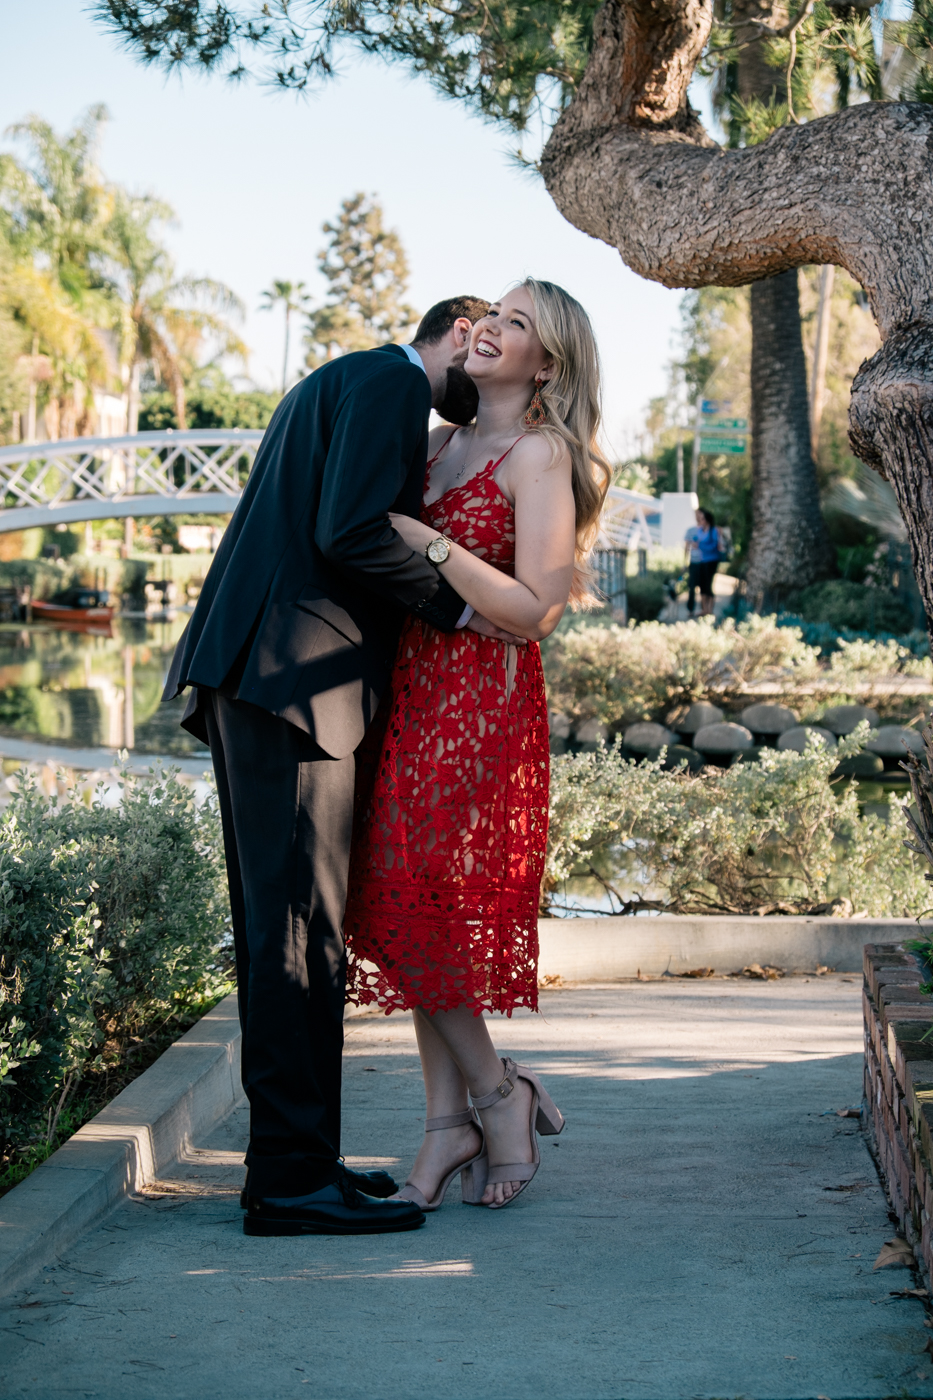 Benjamin and Debora Dahl Valentines Day at the Venice Canals in Los Angeles